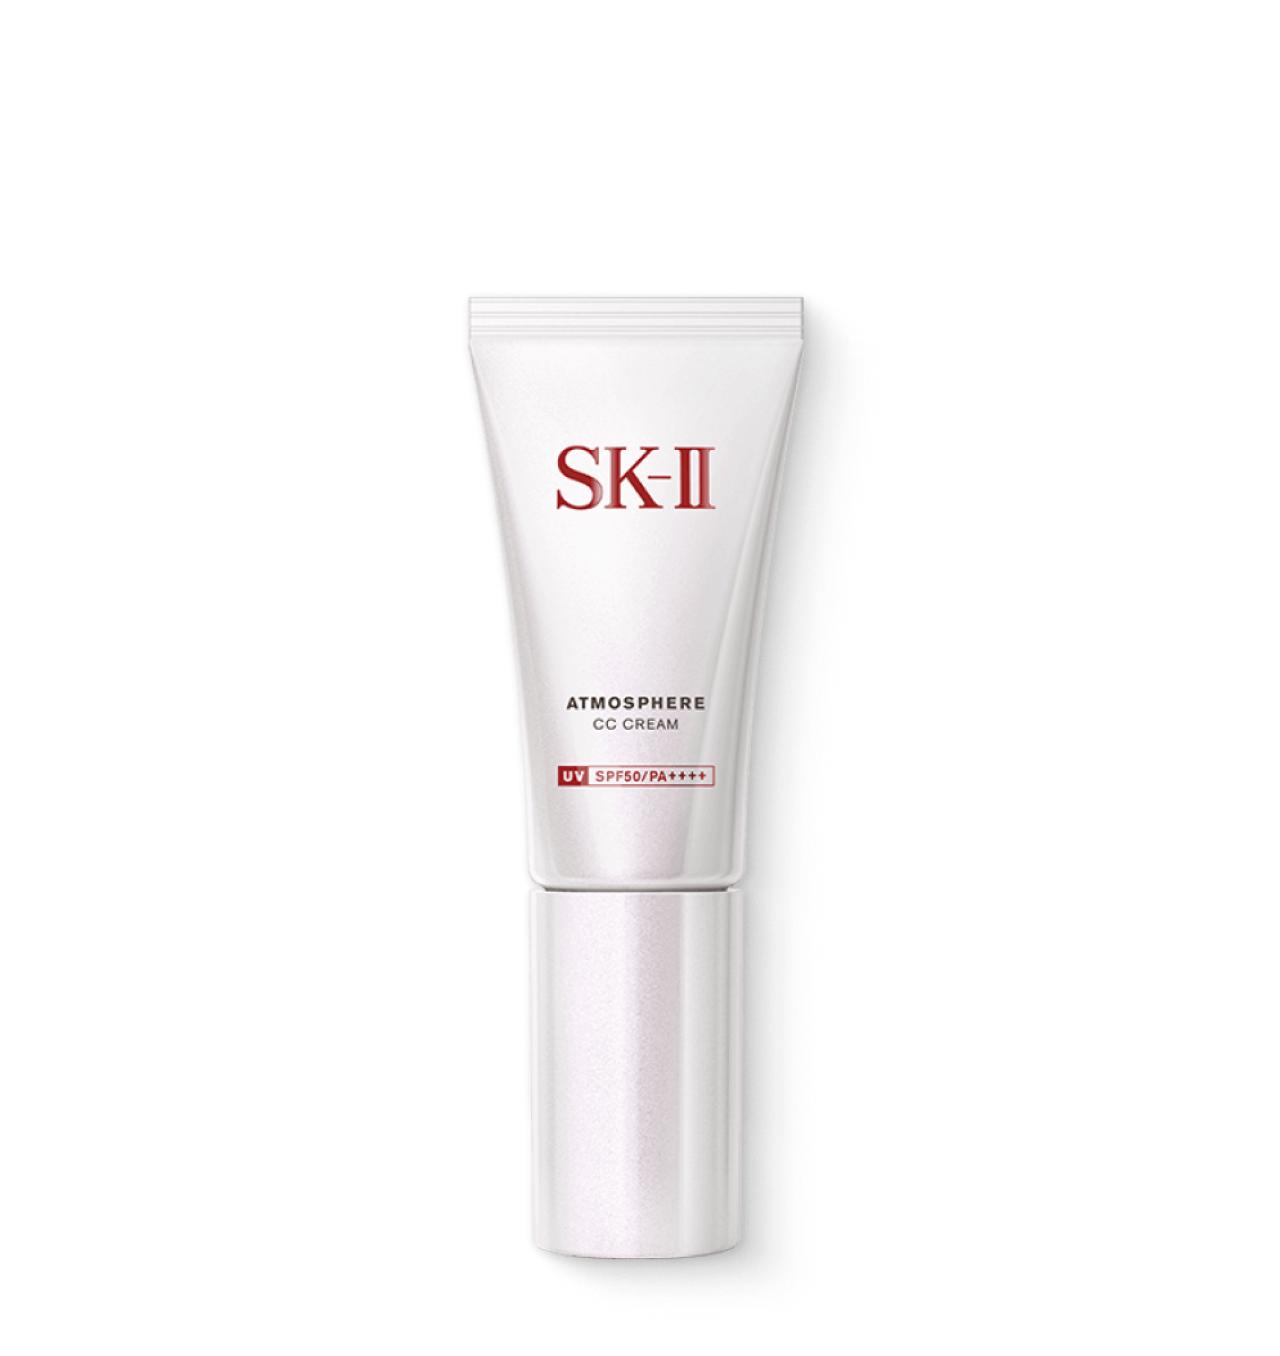 Atmosphere CC Cream SPF 50 PA++++: Face Sunscreen | SK-II MY